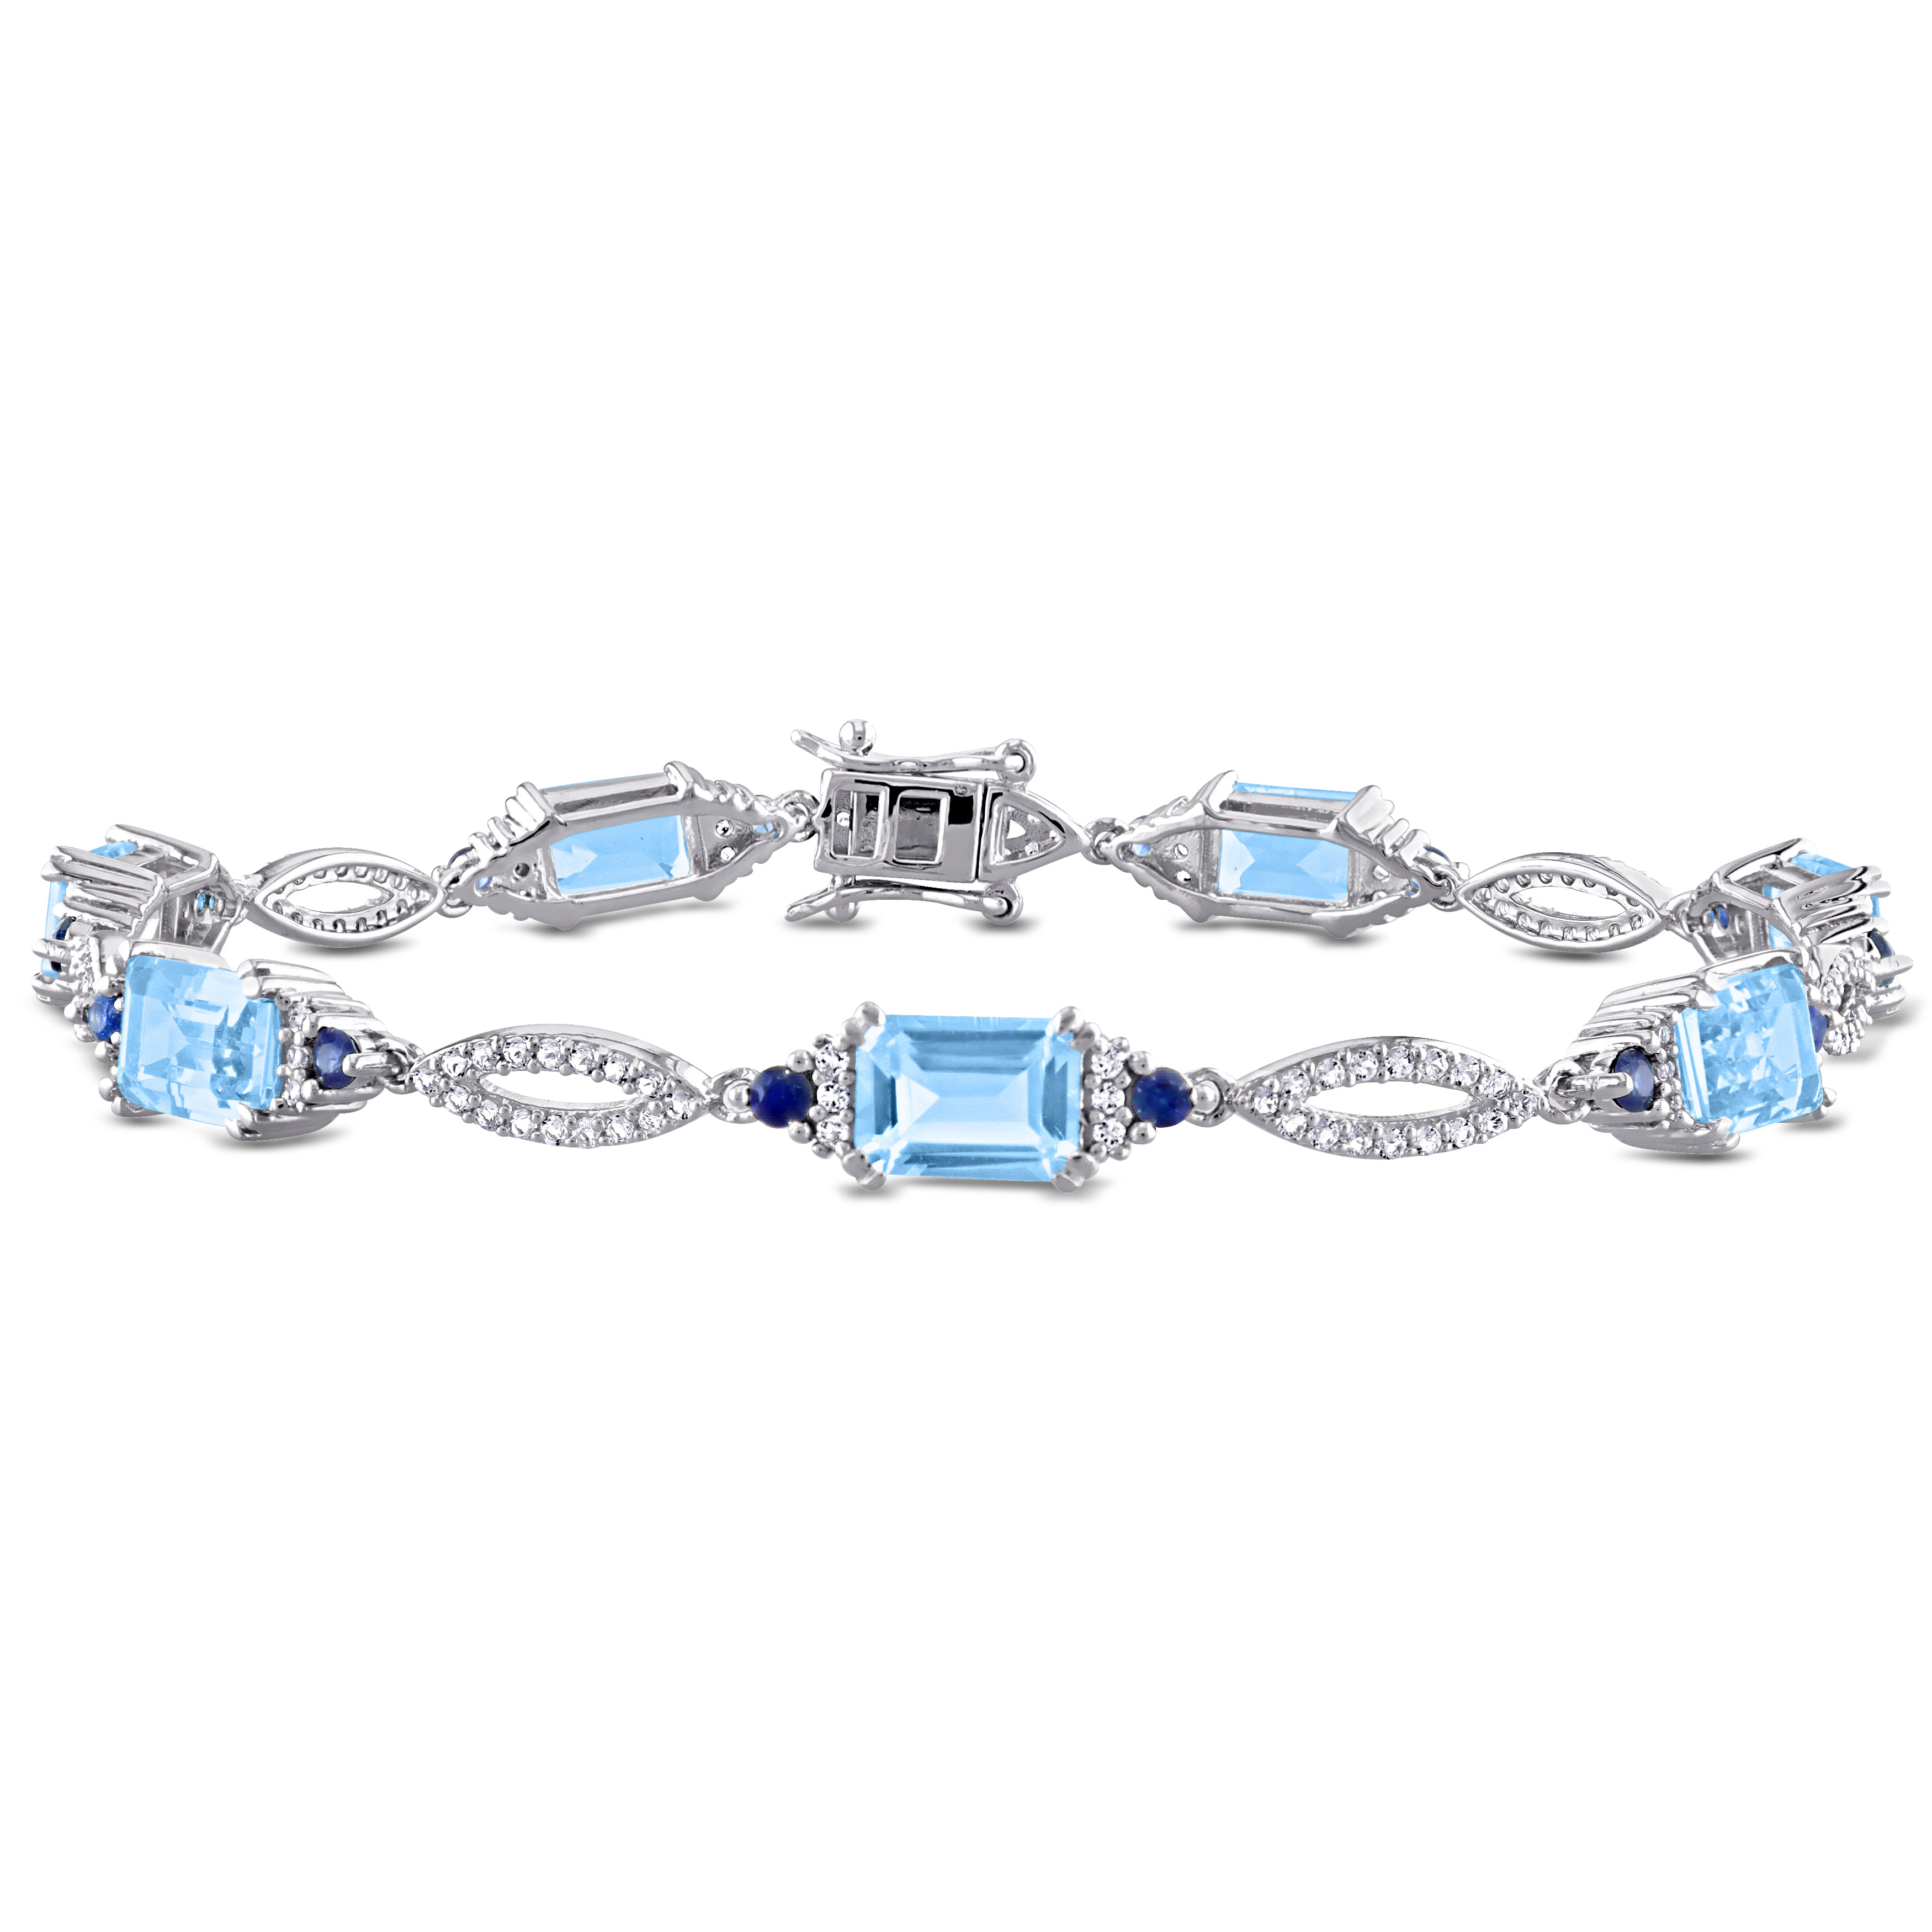 10 1/5 CT TGW Sky Blue Topaz Sapphire and White Topaz Elegant Link Bracelet in Sterling Silver - 7.25 in.